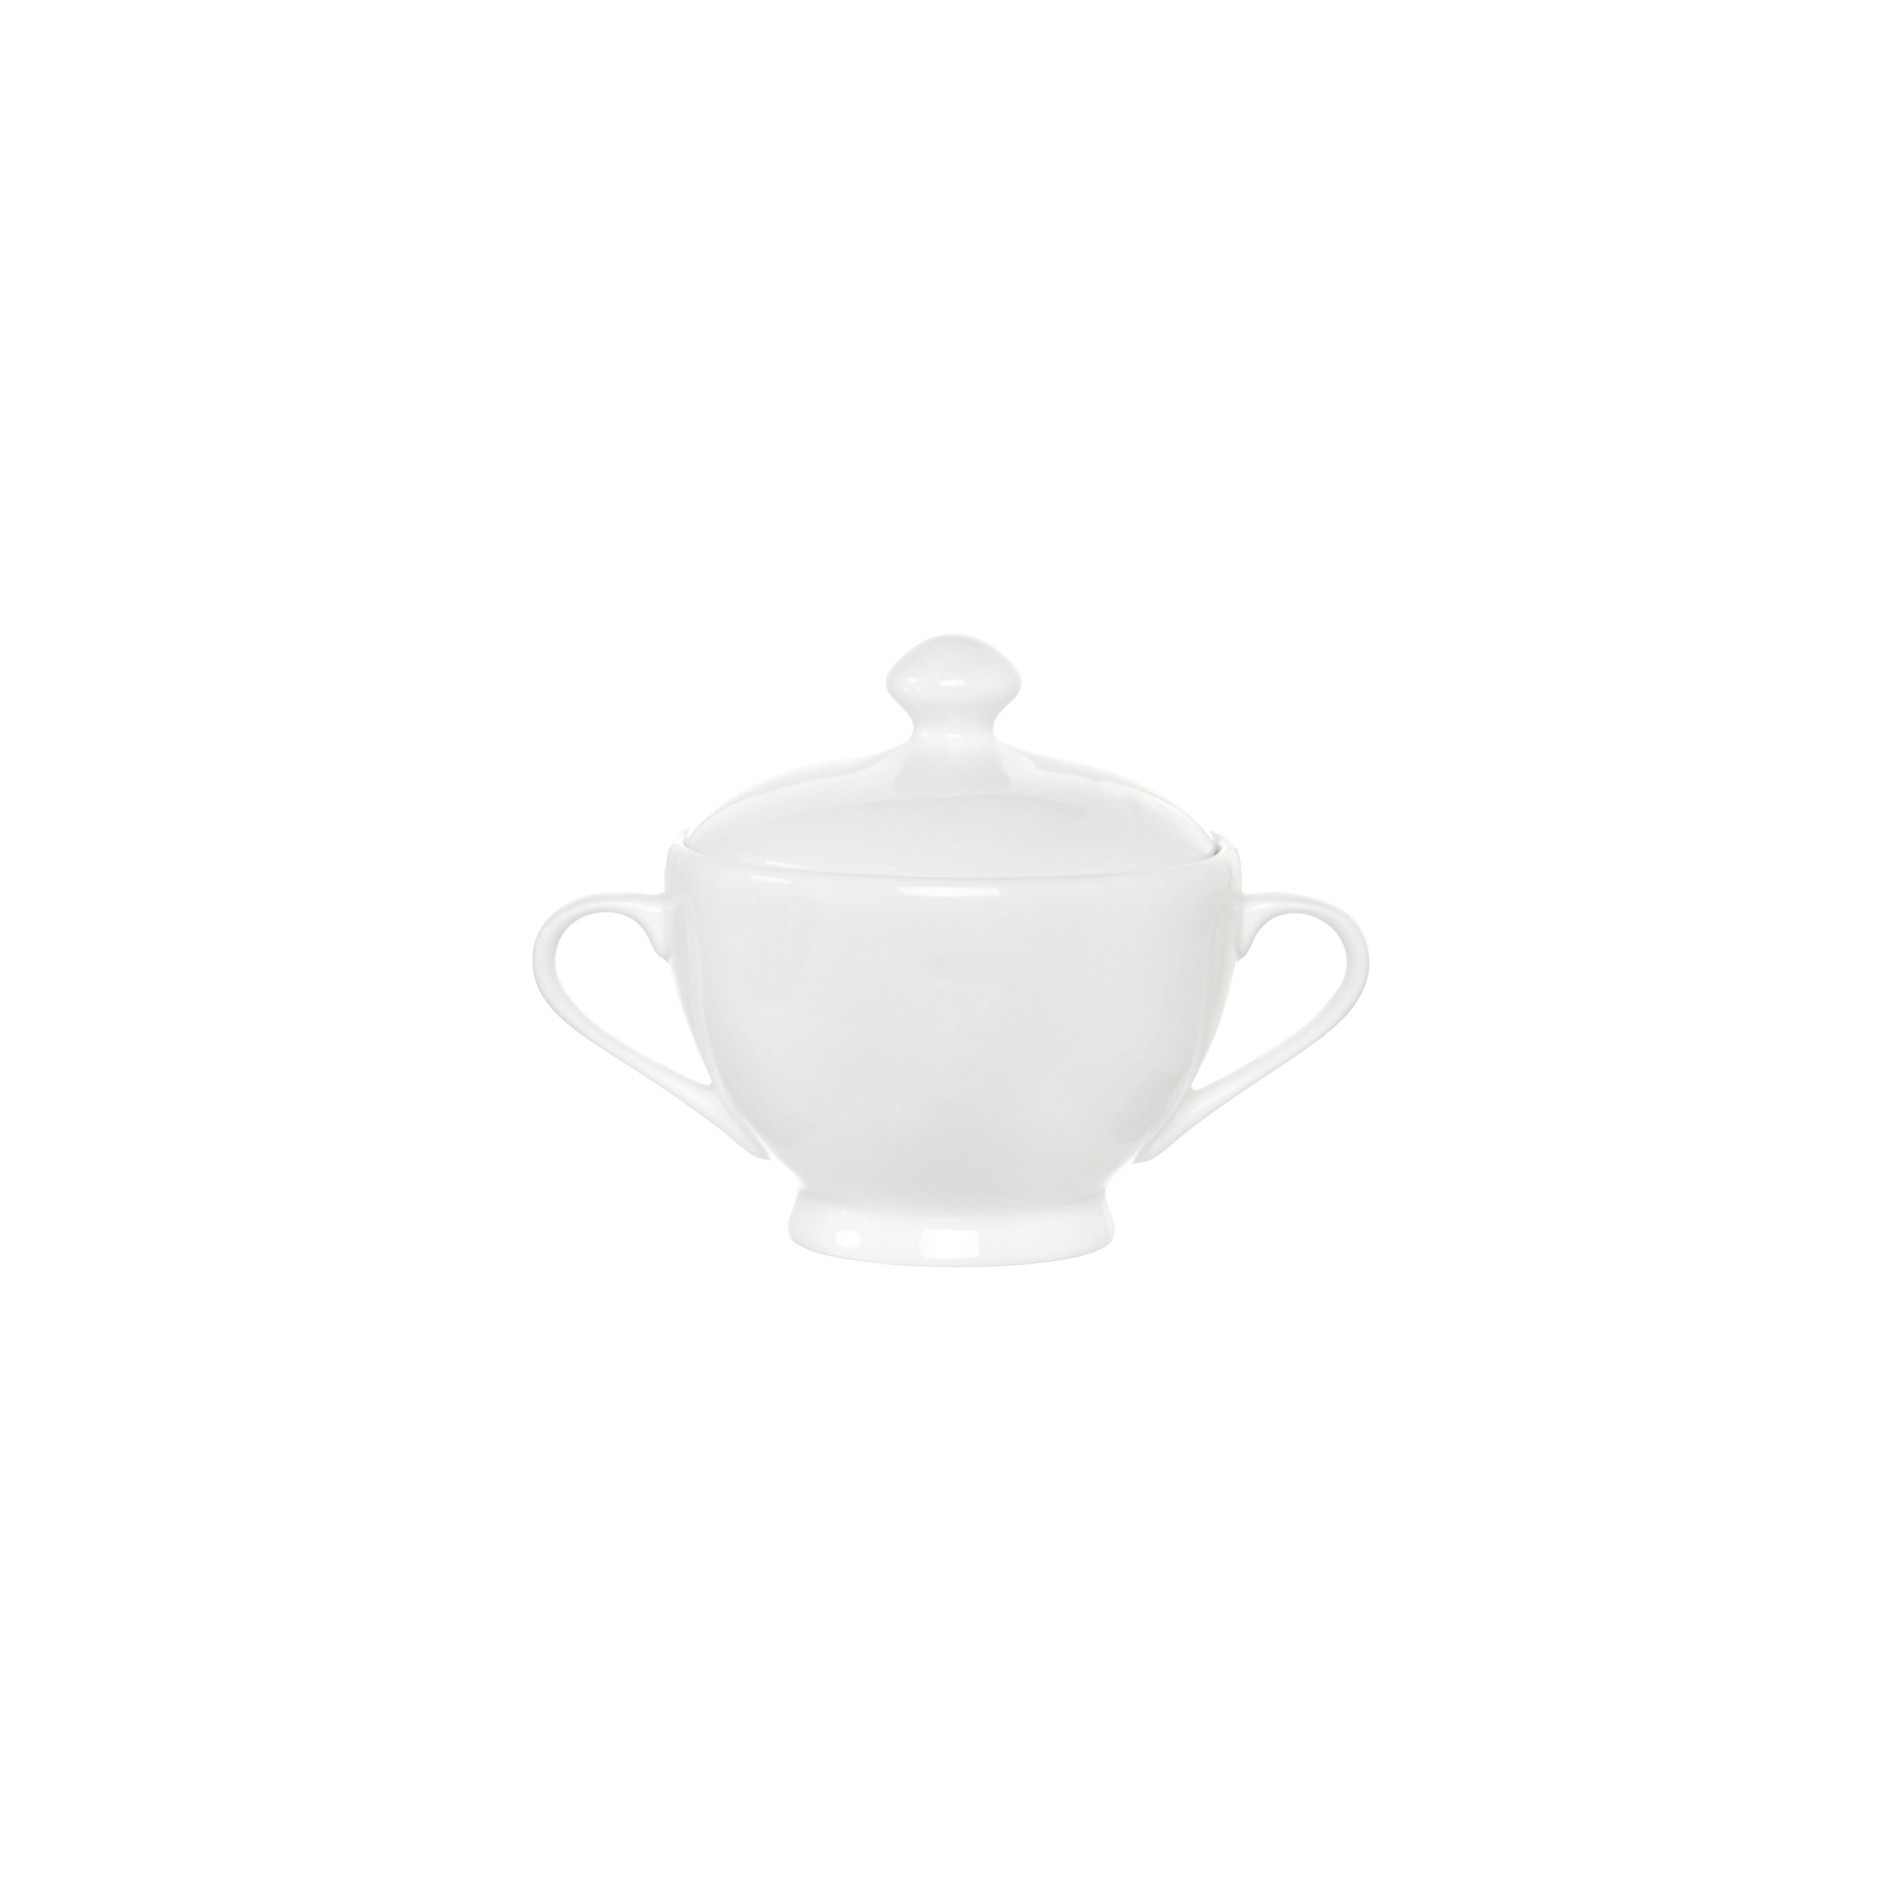 Veronica new bone china sugar bowl, White, large image number 0